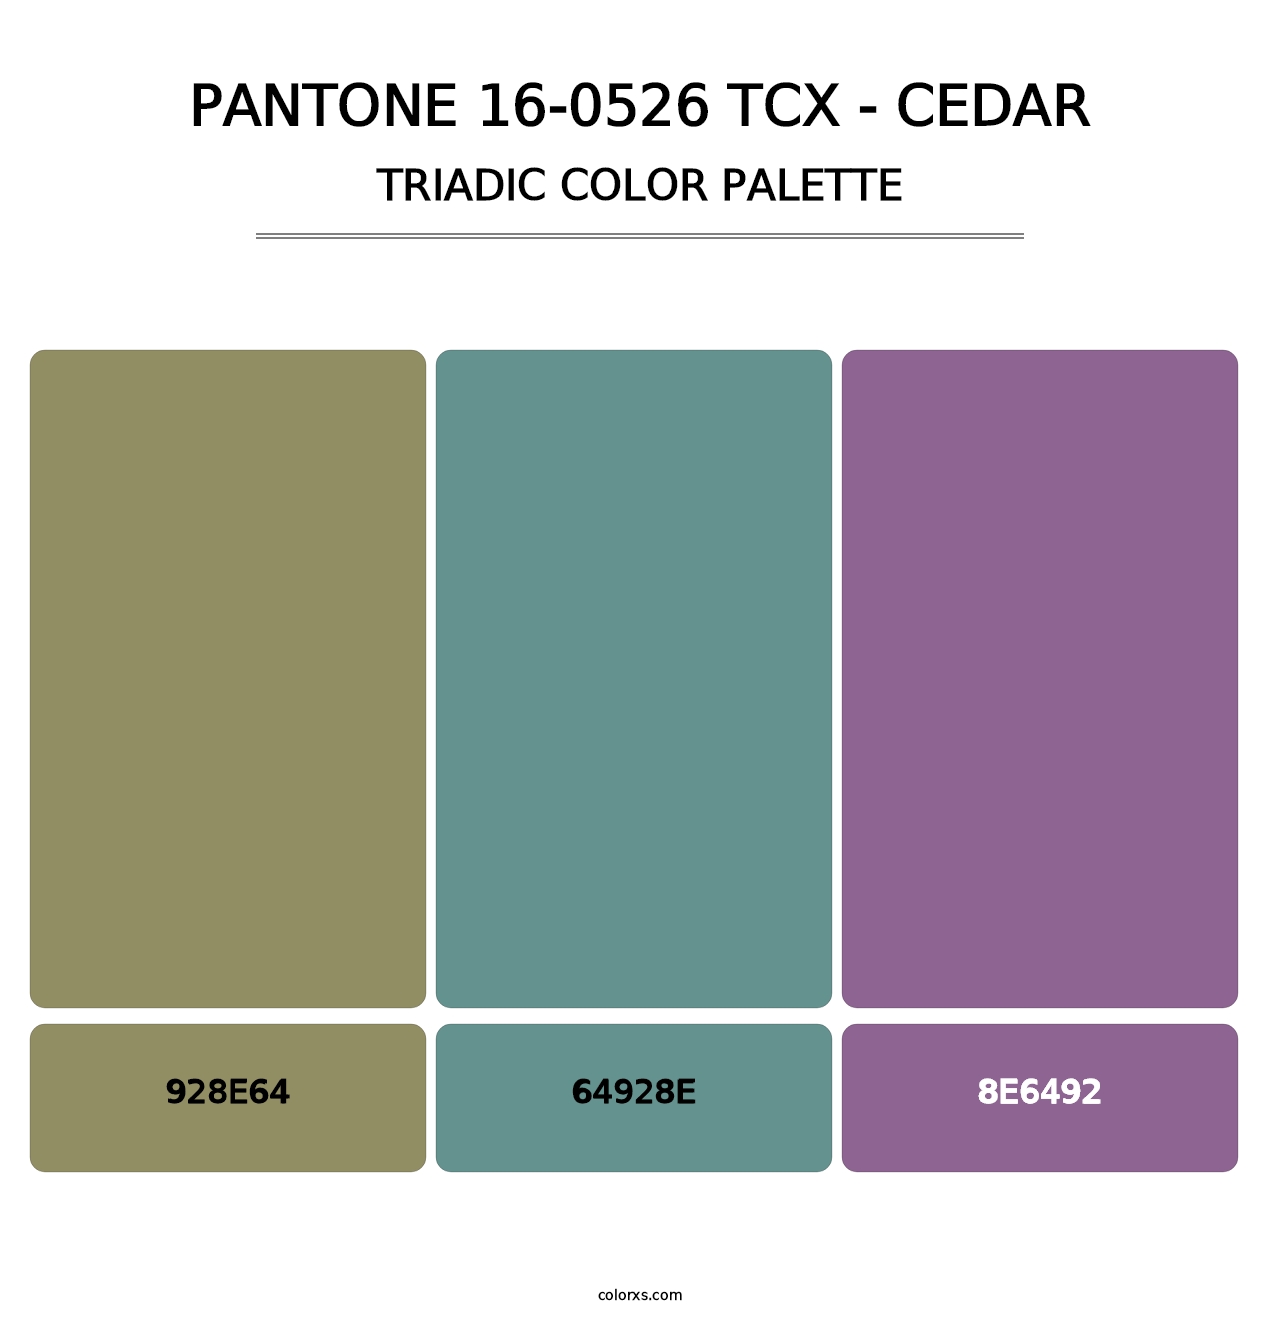 PANTONE 16-0526 TCX - Cedar - Triadic Color Palette